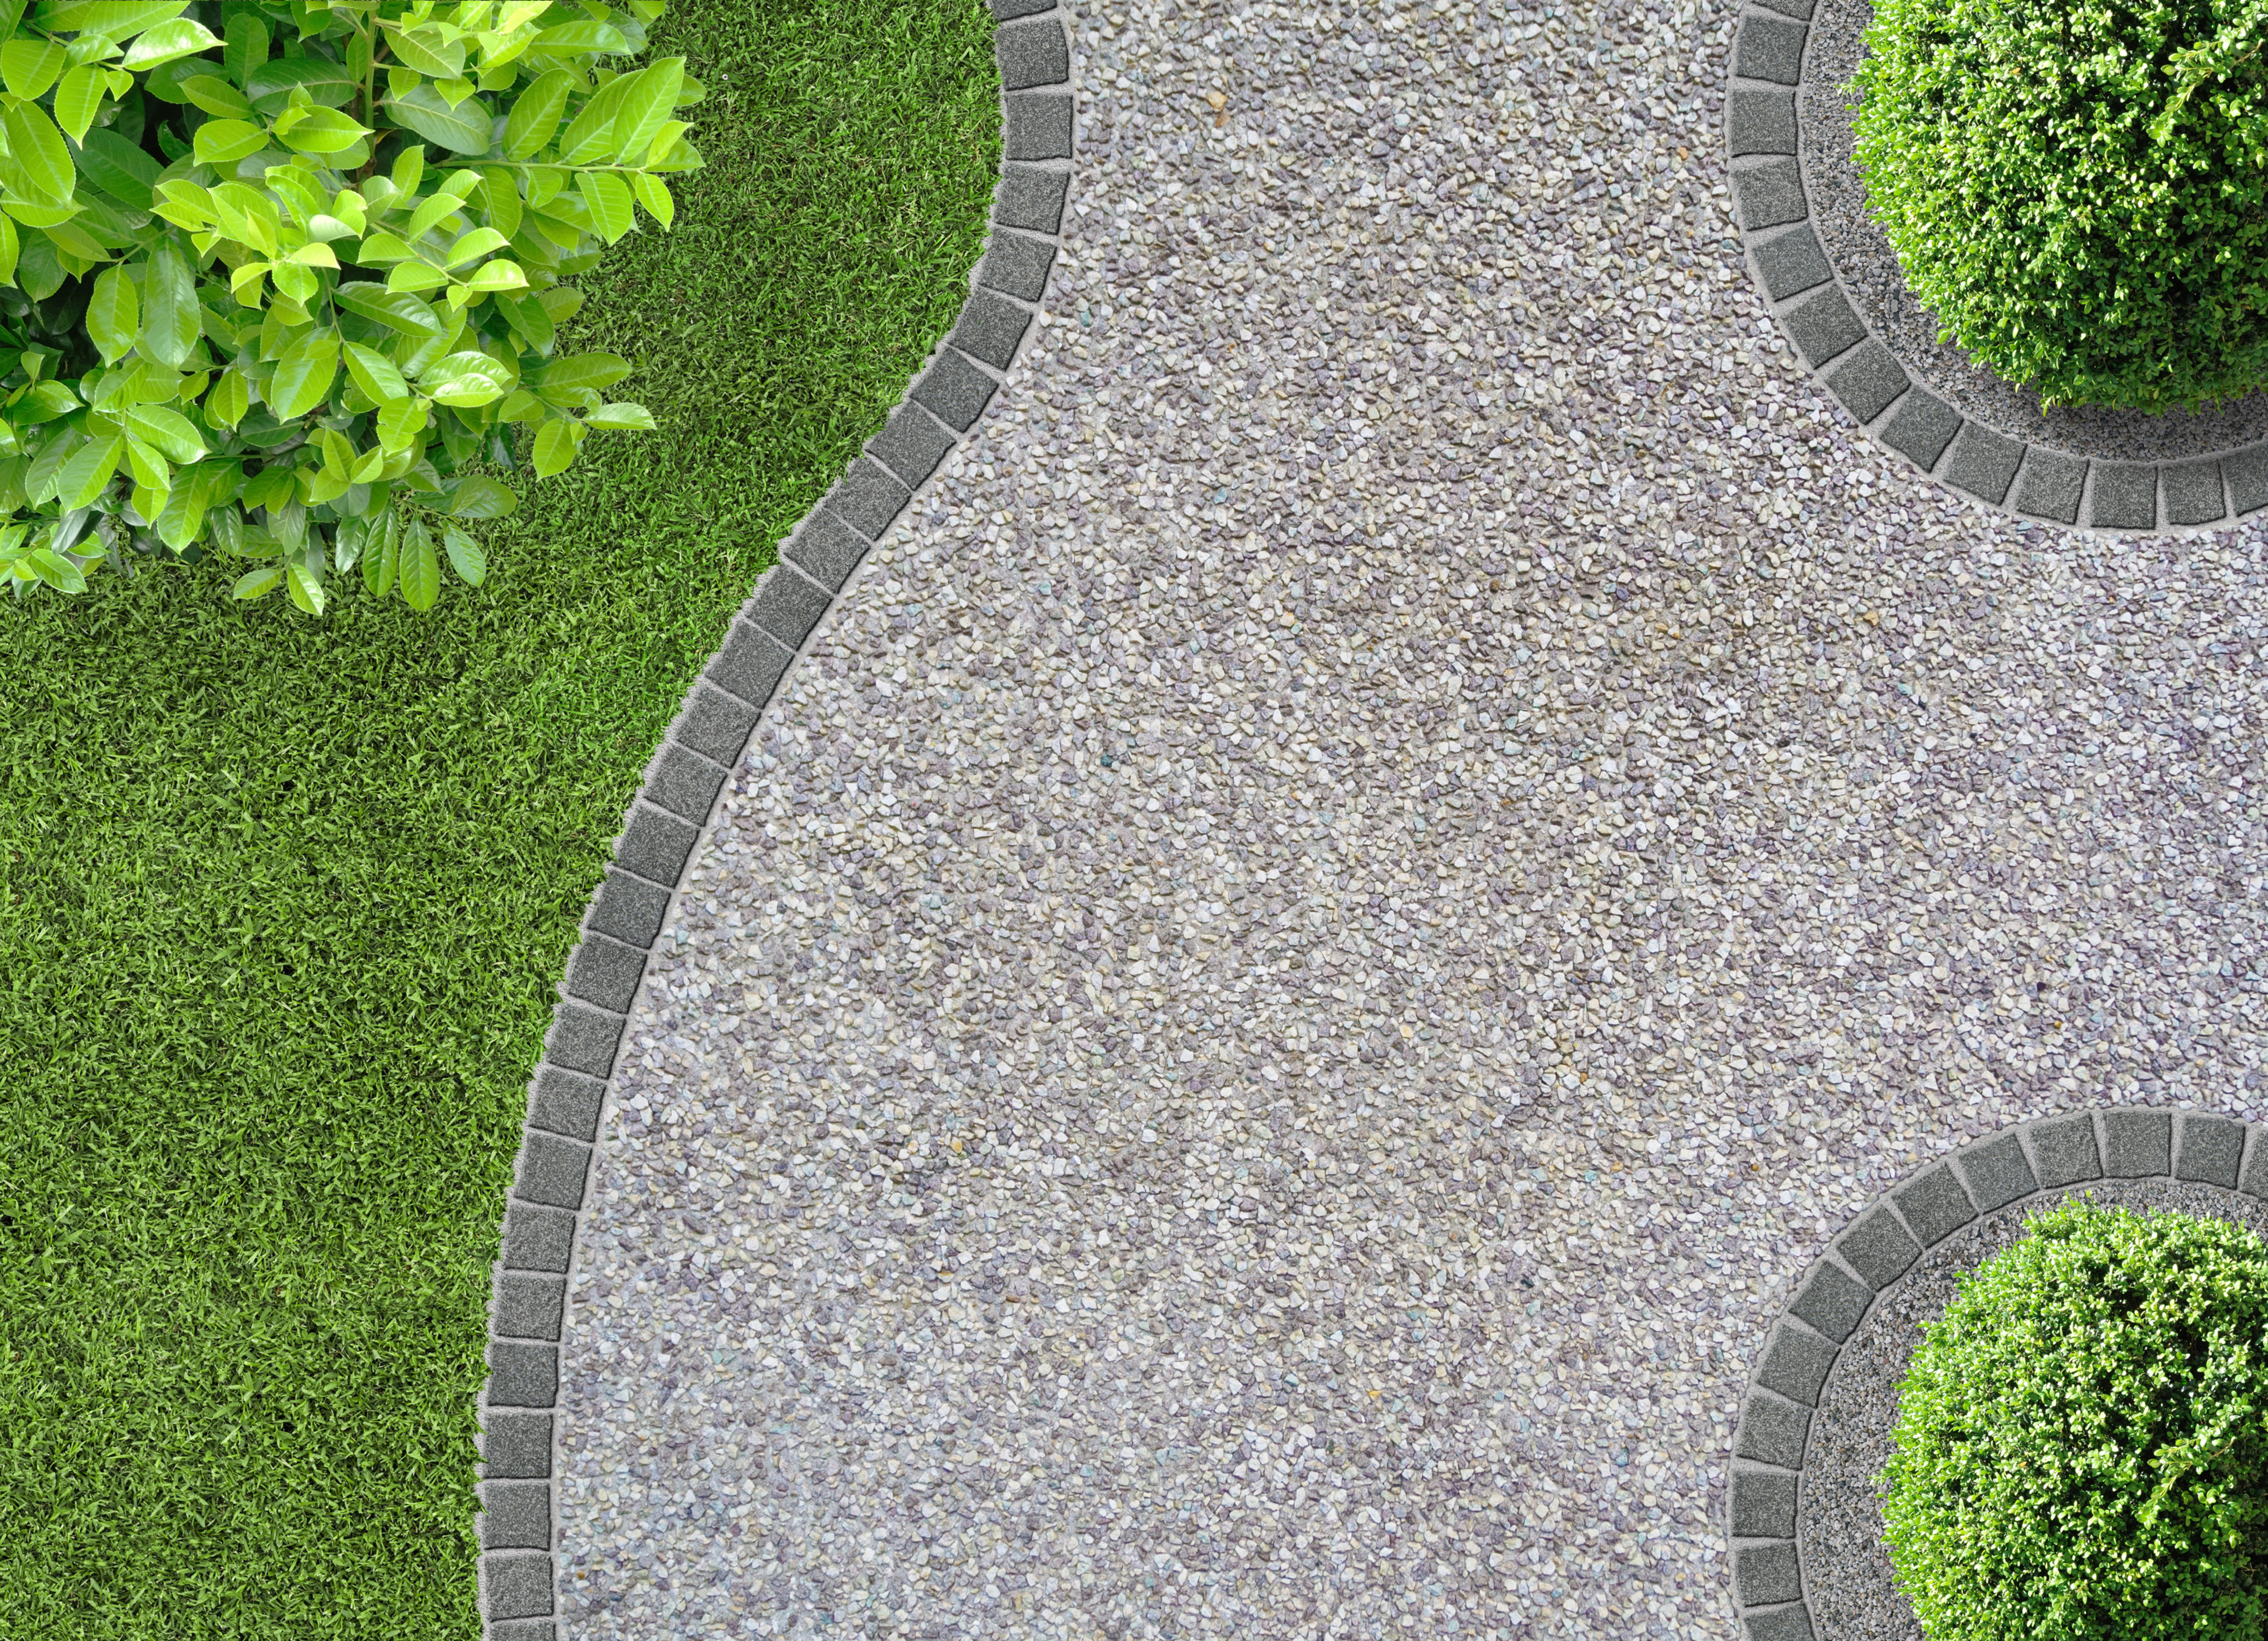 Tuin met mooi voetpad gemaakt van uitgeschakeld beton